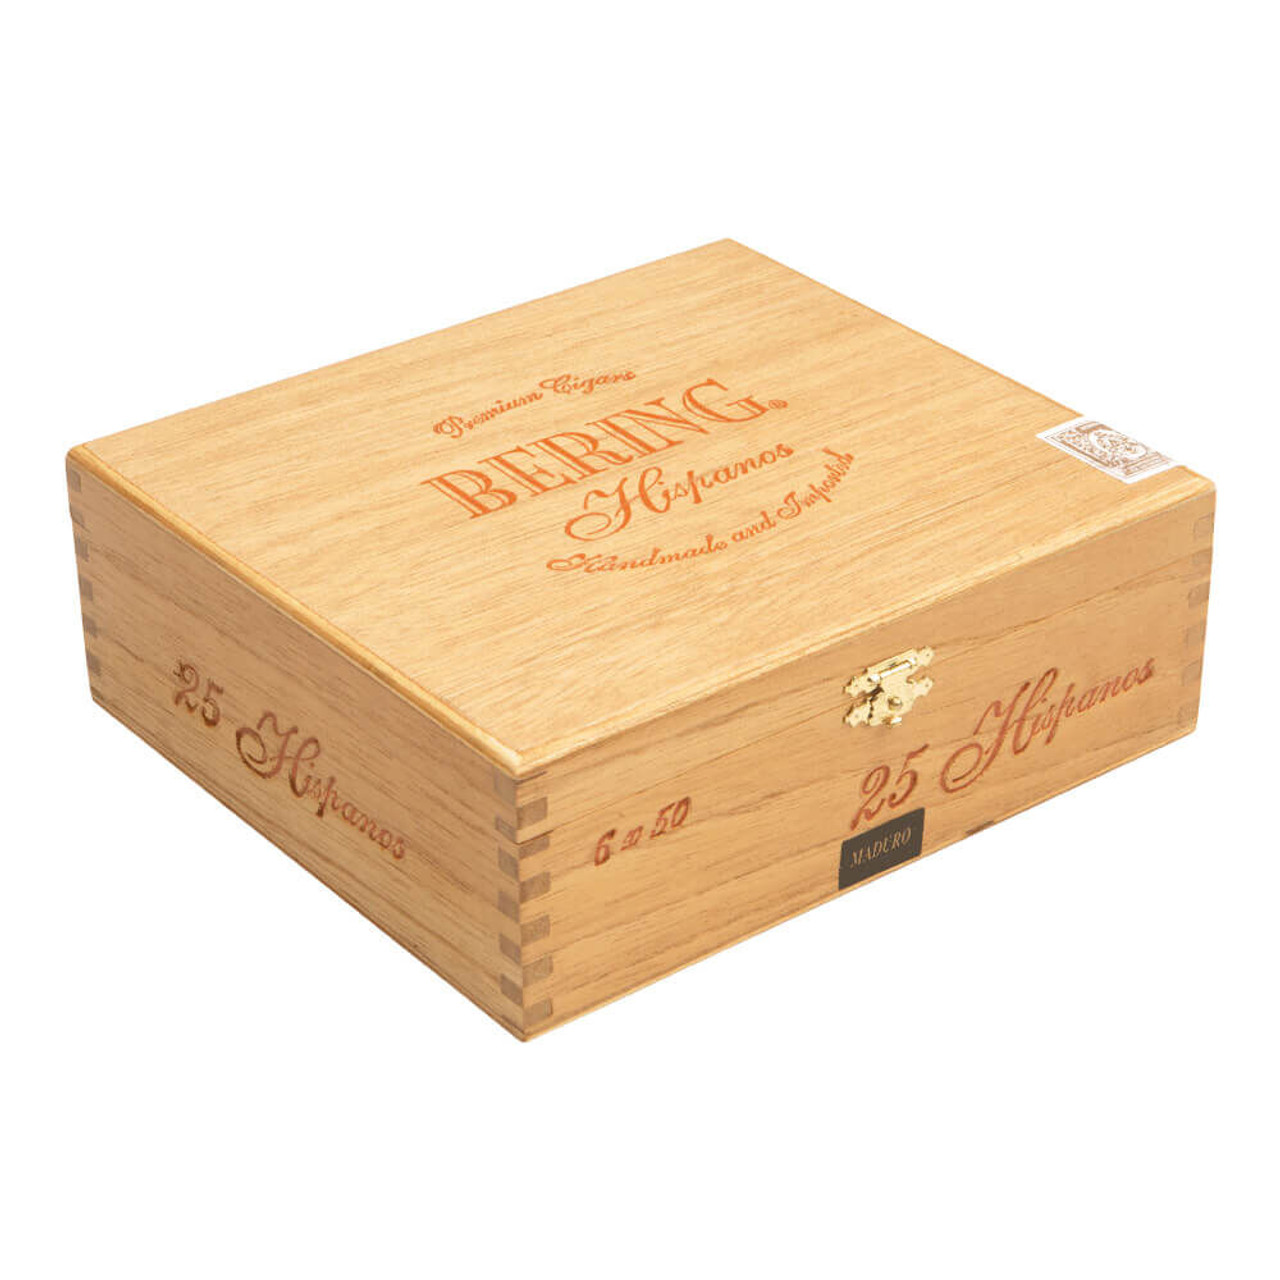 Bering Hispanos Maduro Cigars - 6 x 50 (Box of 25) *Box